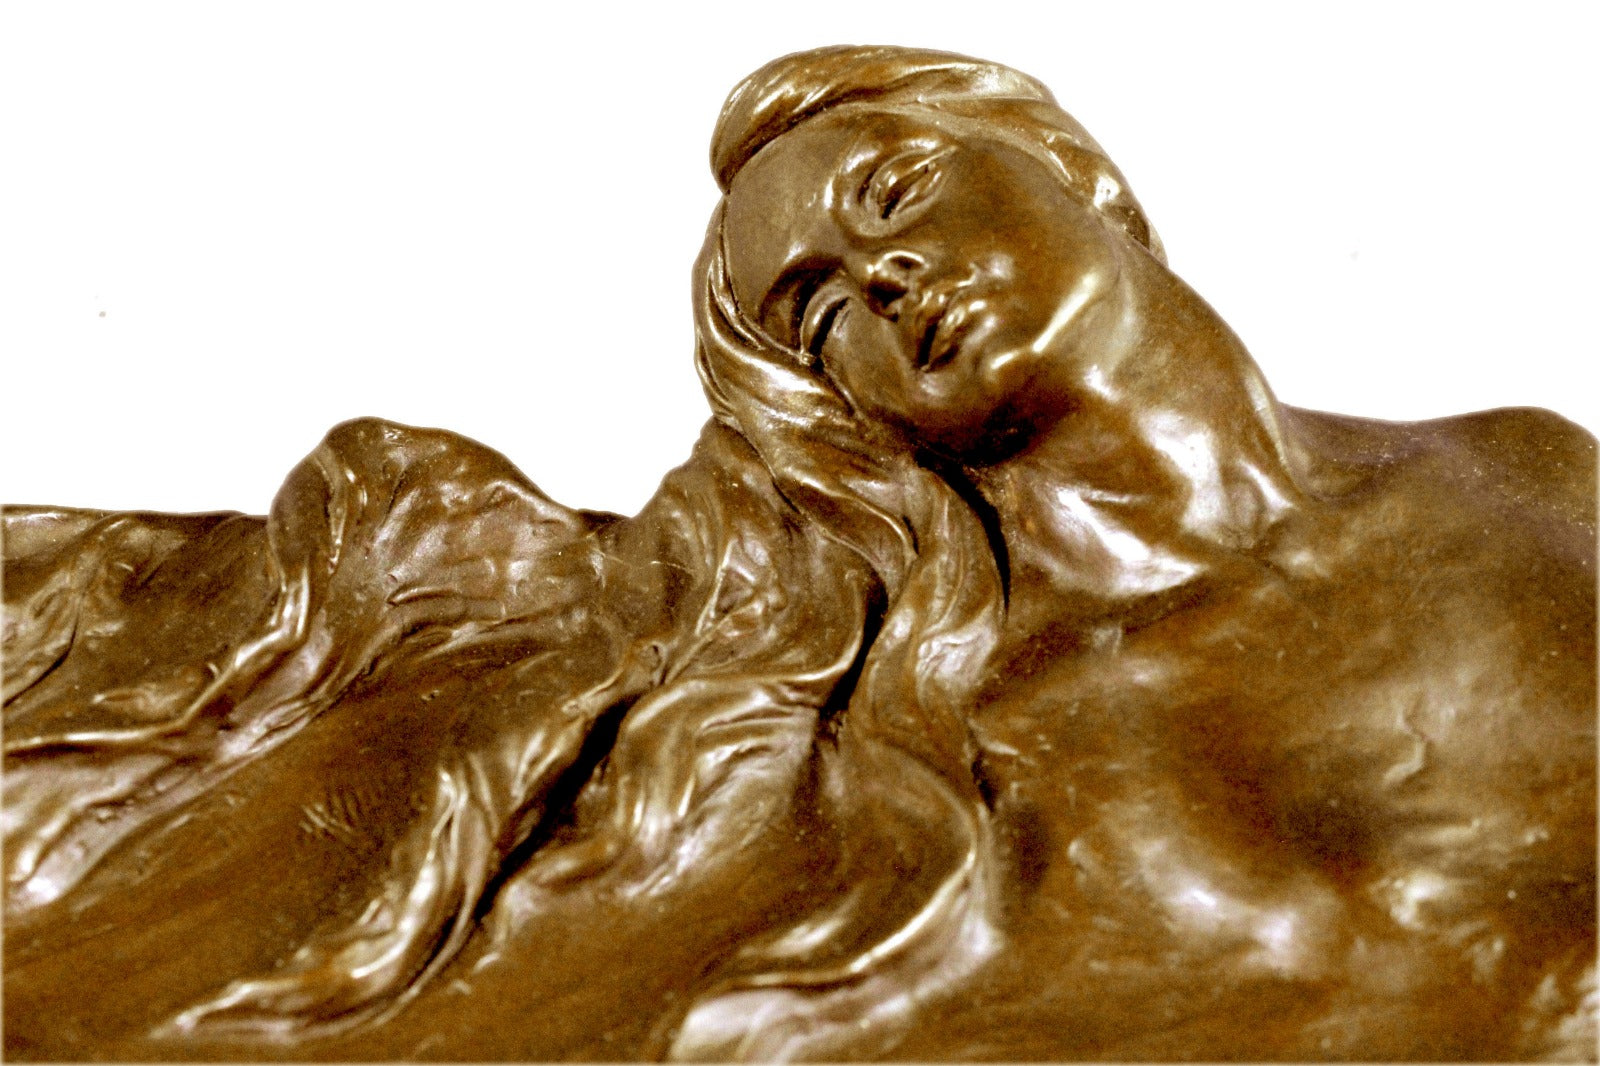 Art Decor Hot Cast Detailed Museum Quality Nude Sculpture Figurine Lost Wax